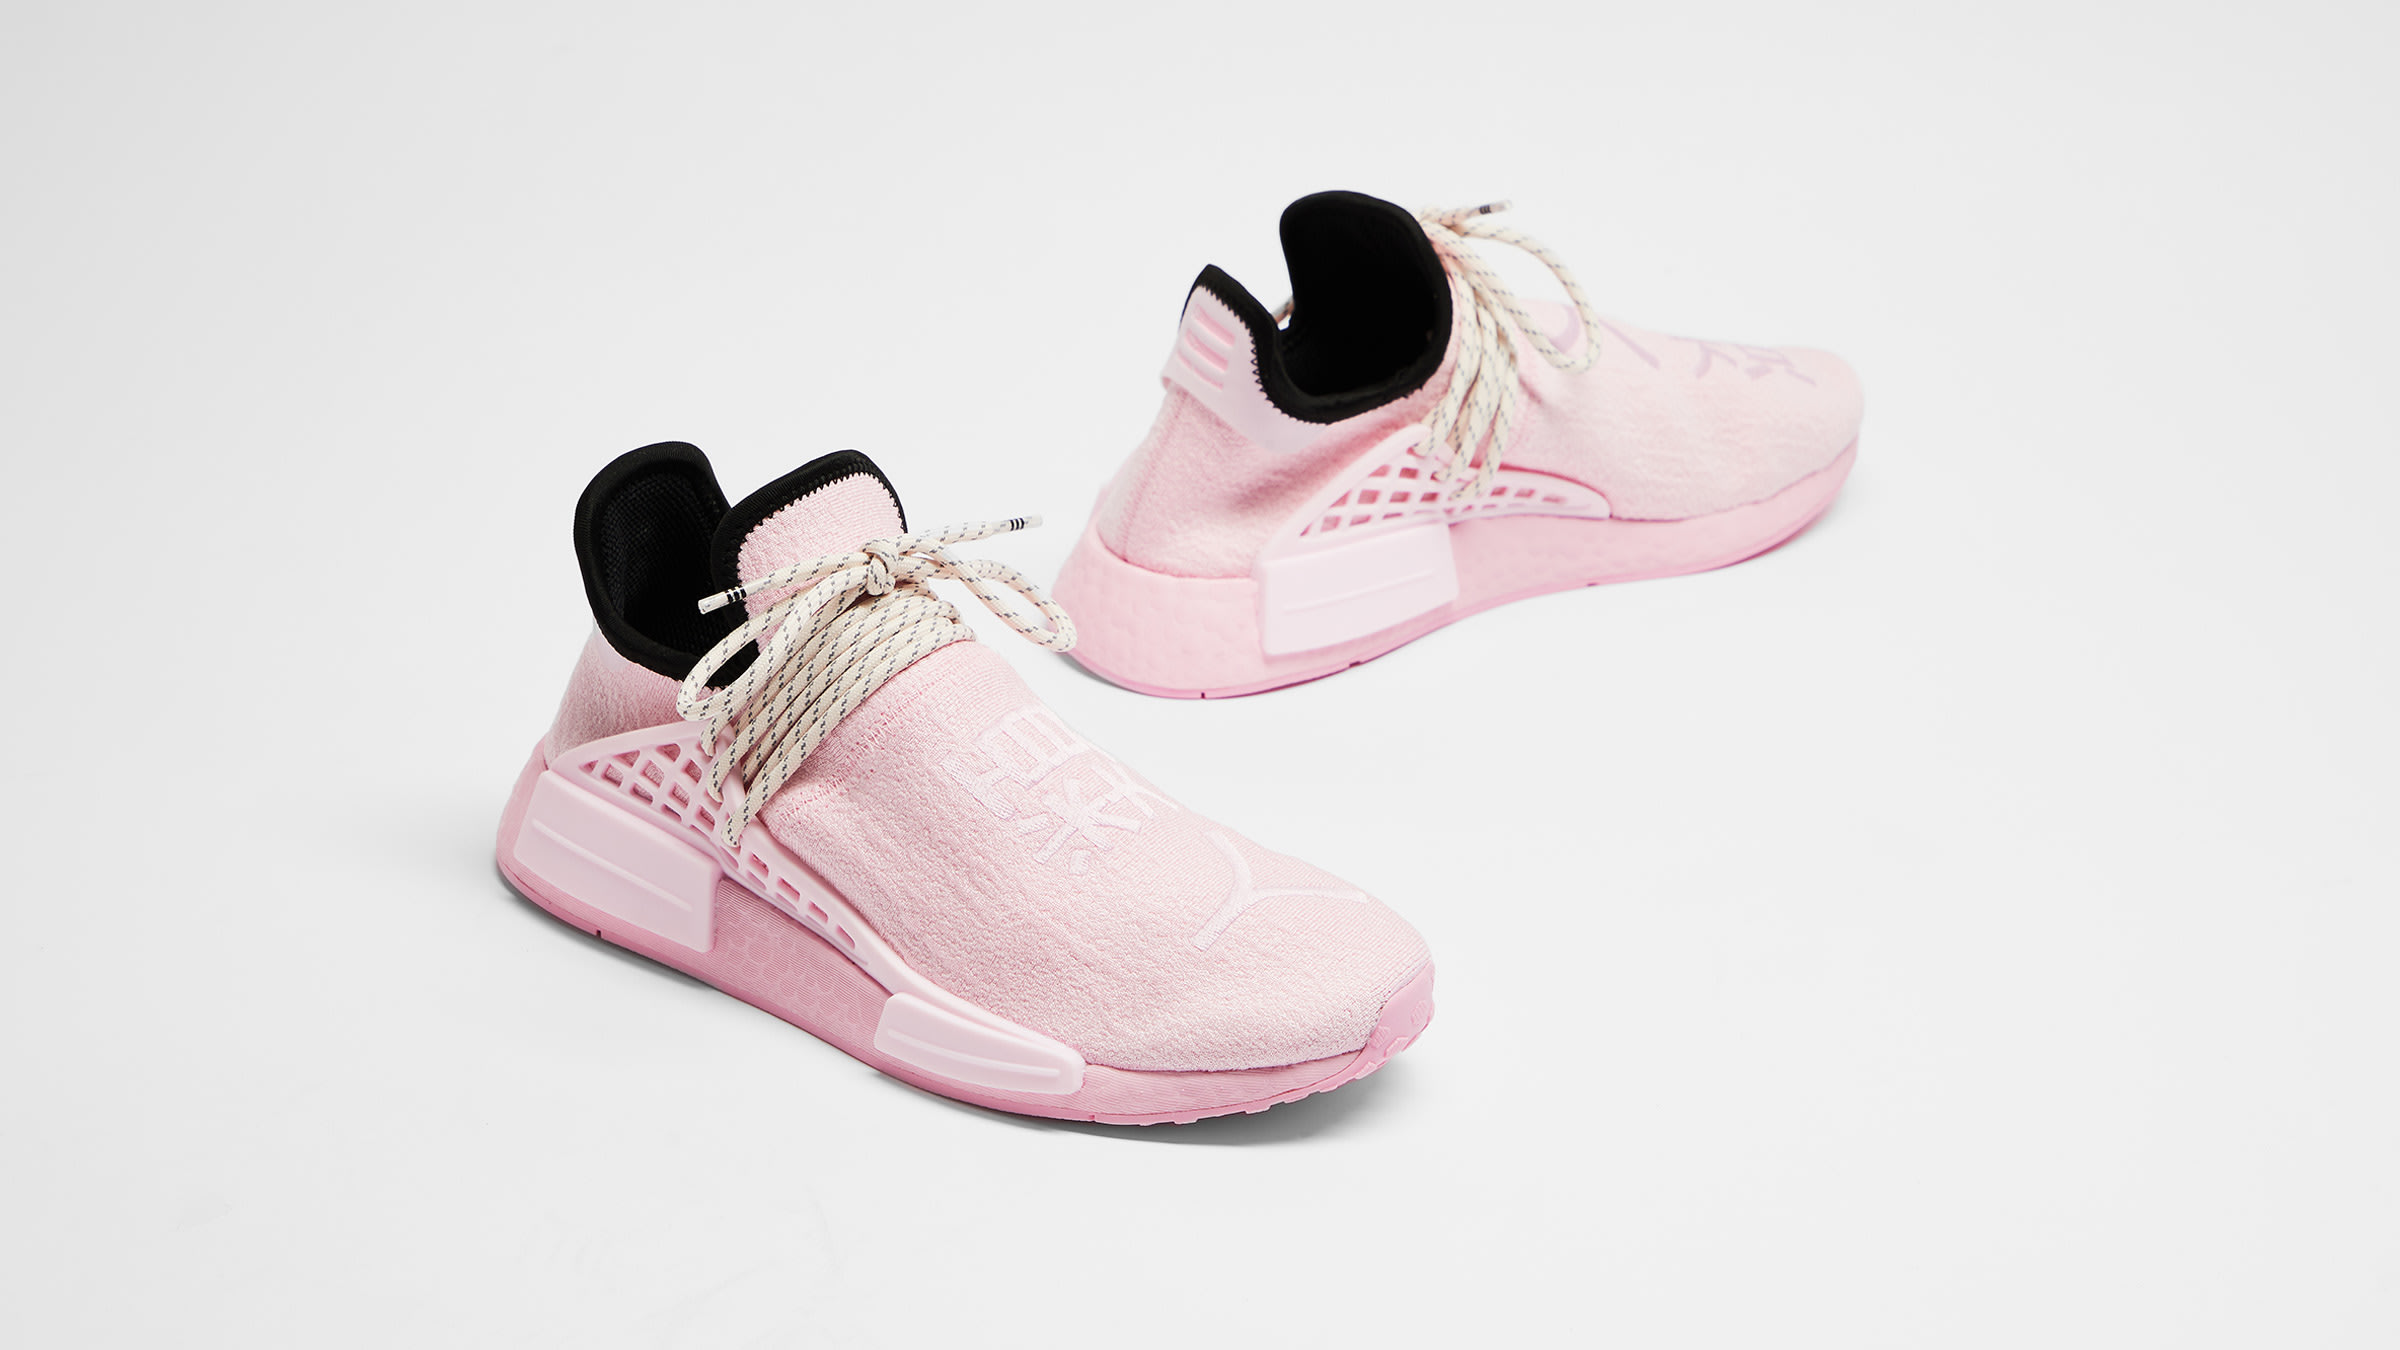 Pharrell x adidas NMD Hu “Bubblegum Pink” Release Date